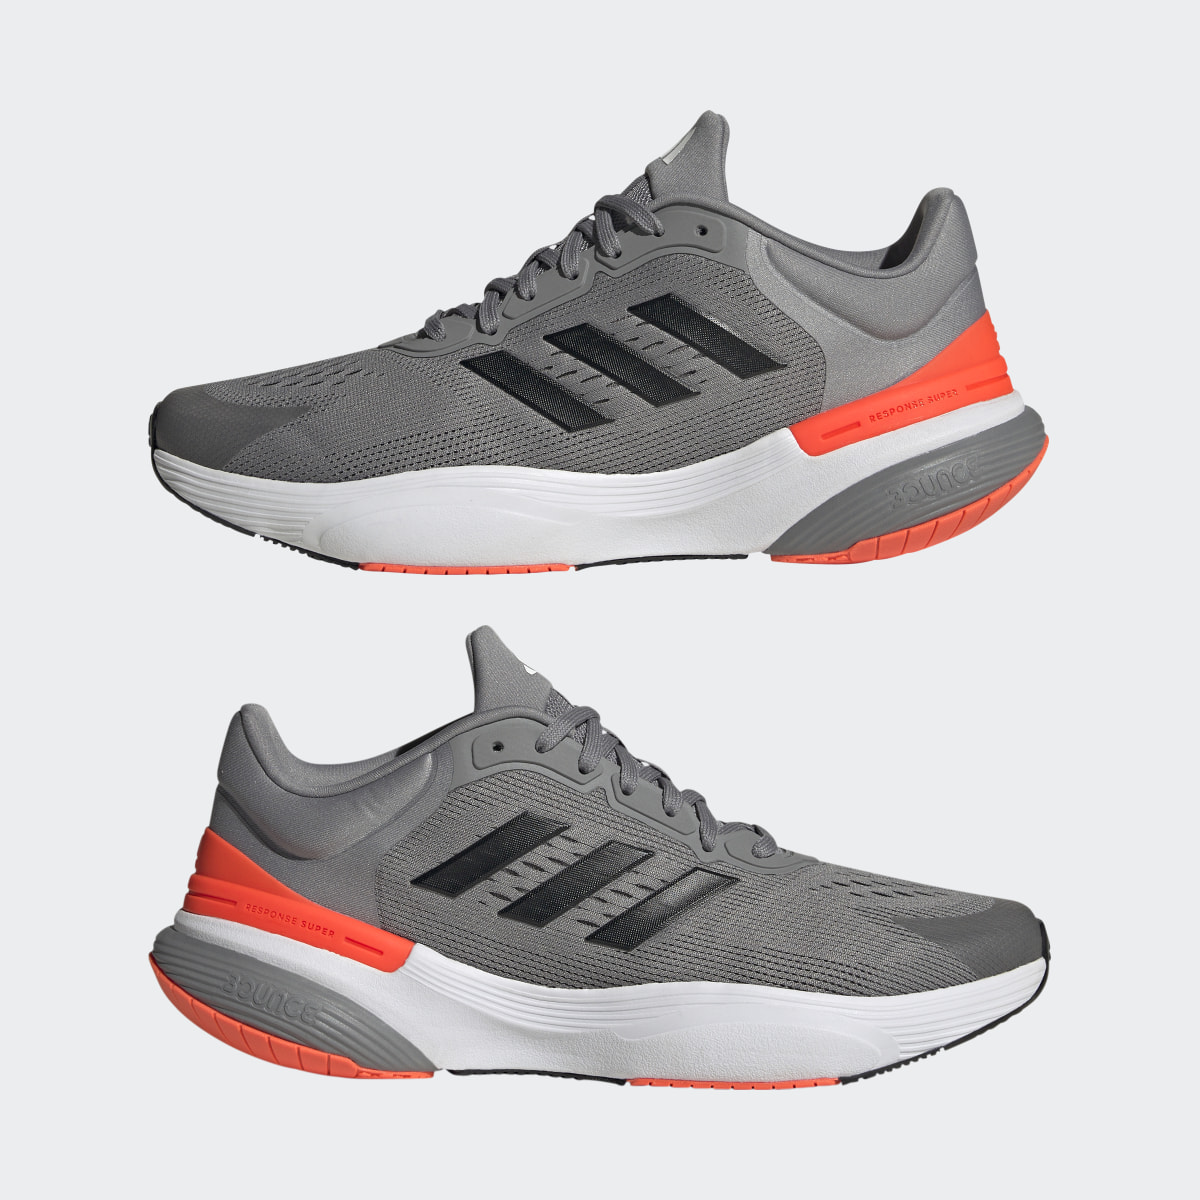 Adidas Response Super 3 Shoes. 8